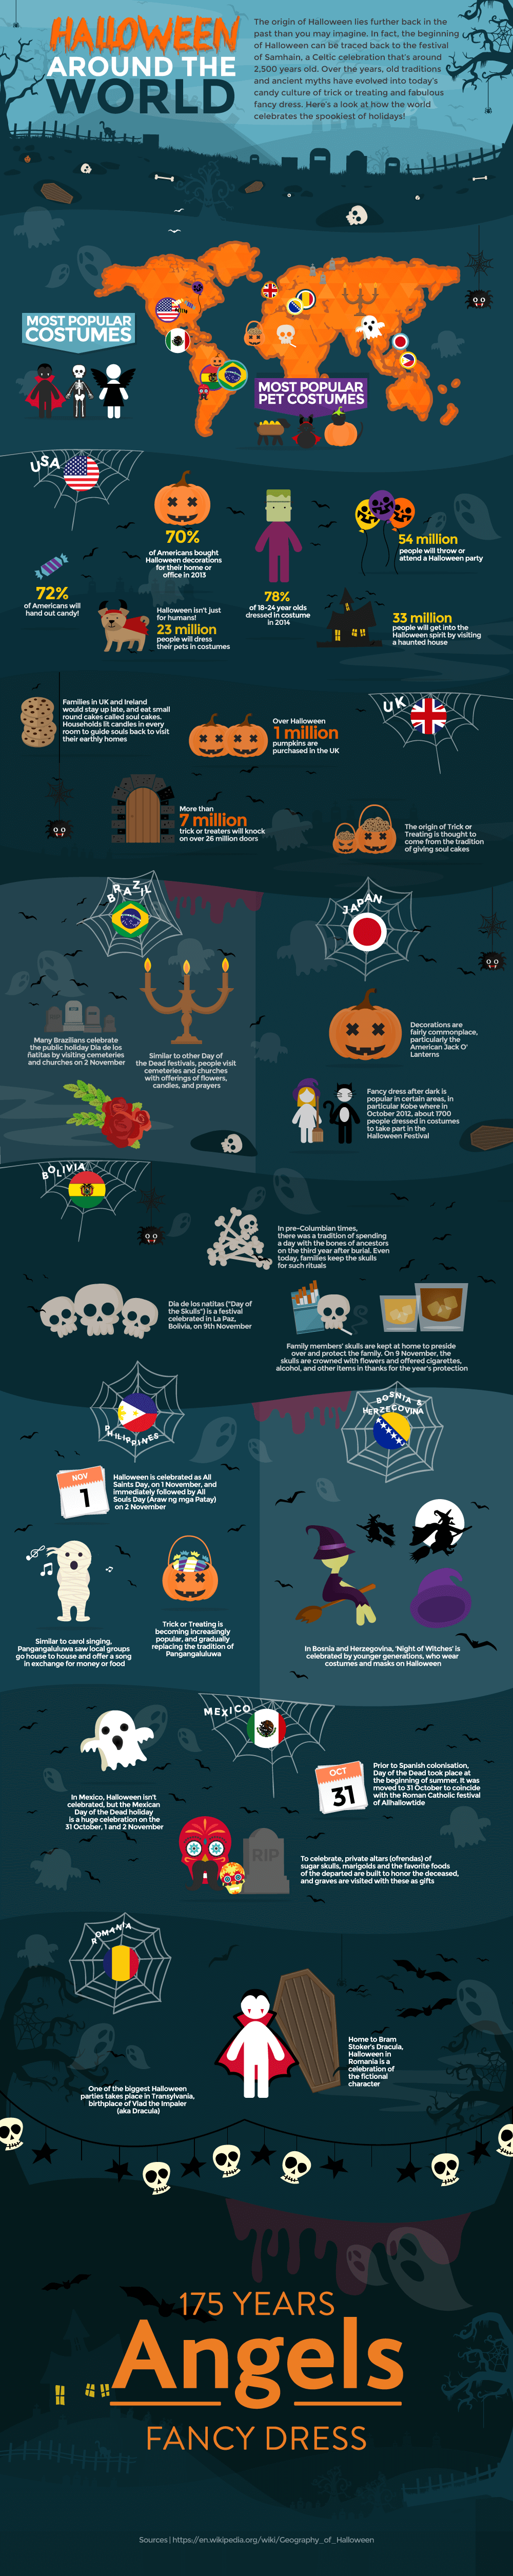 Halloween Around The World